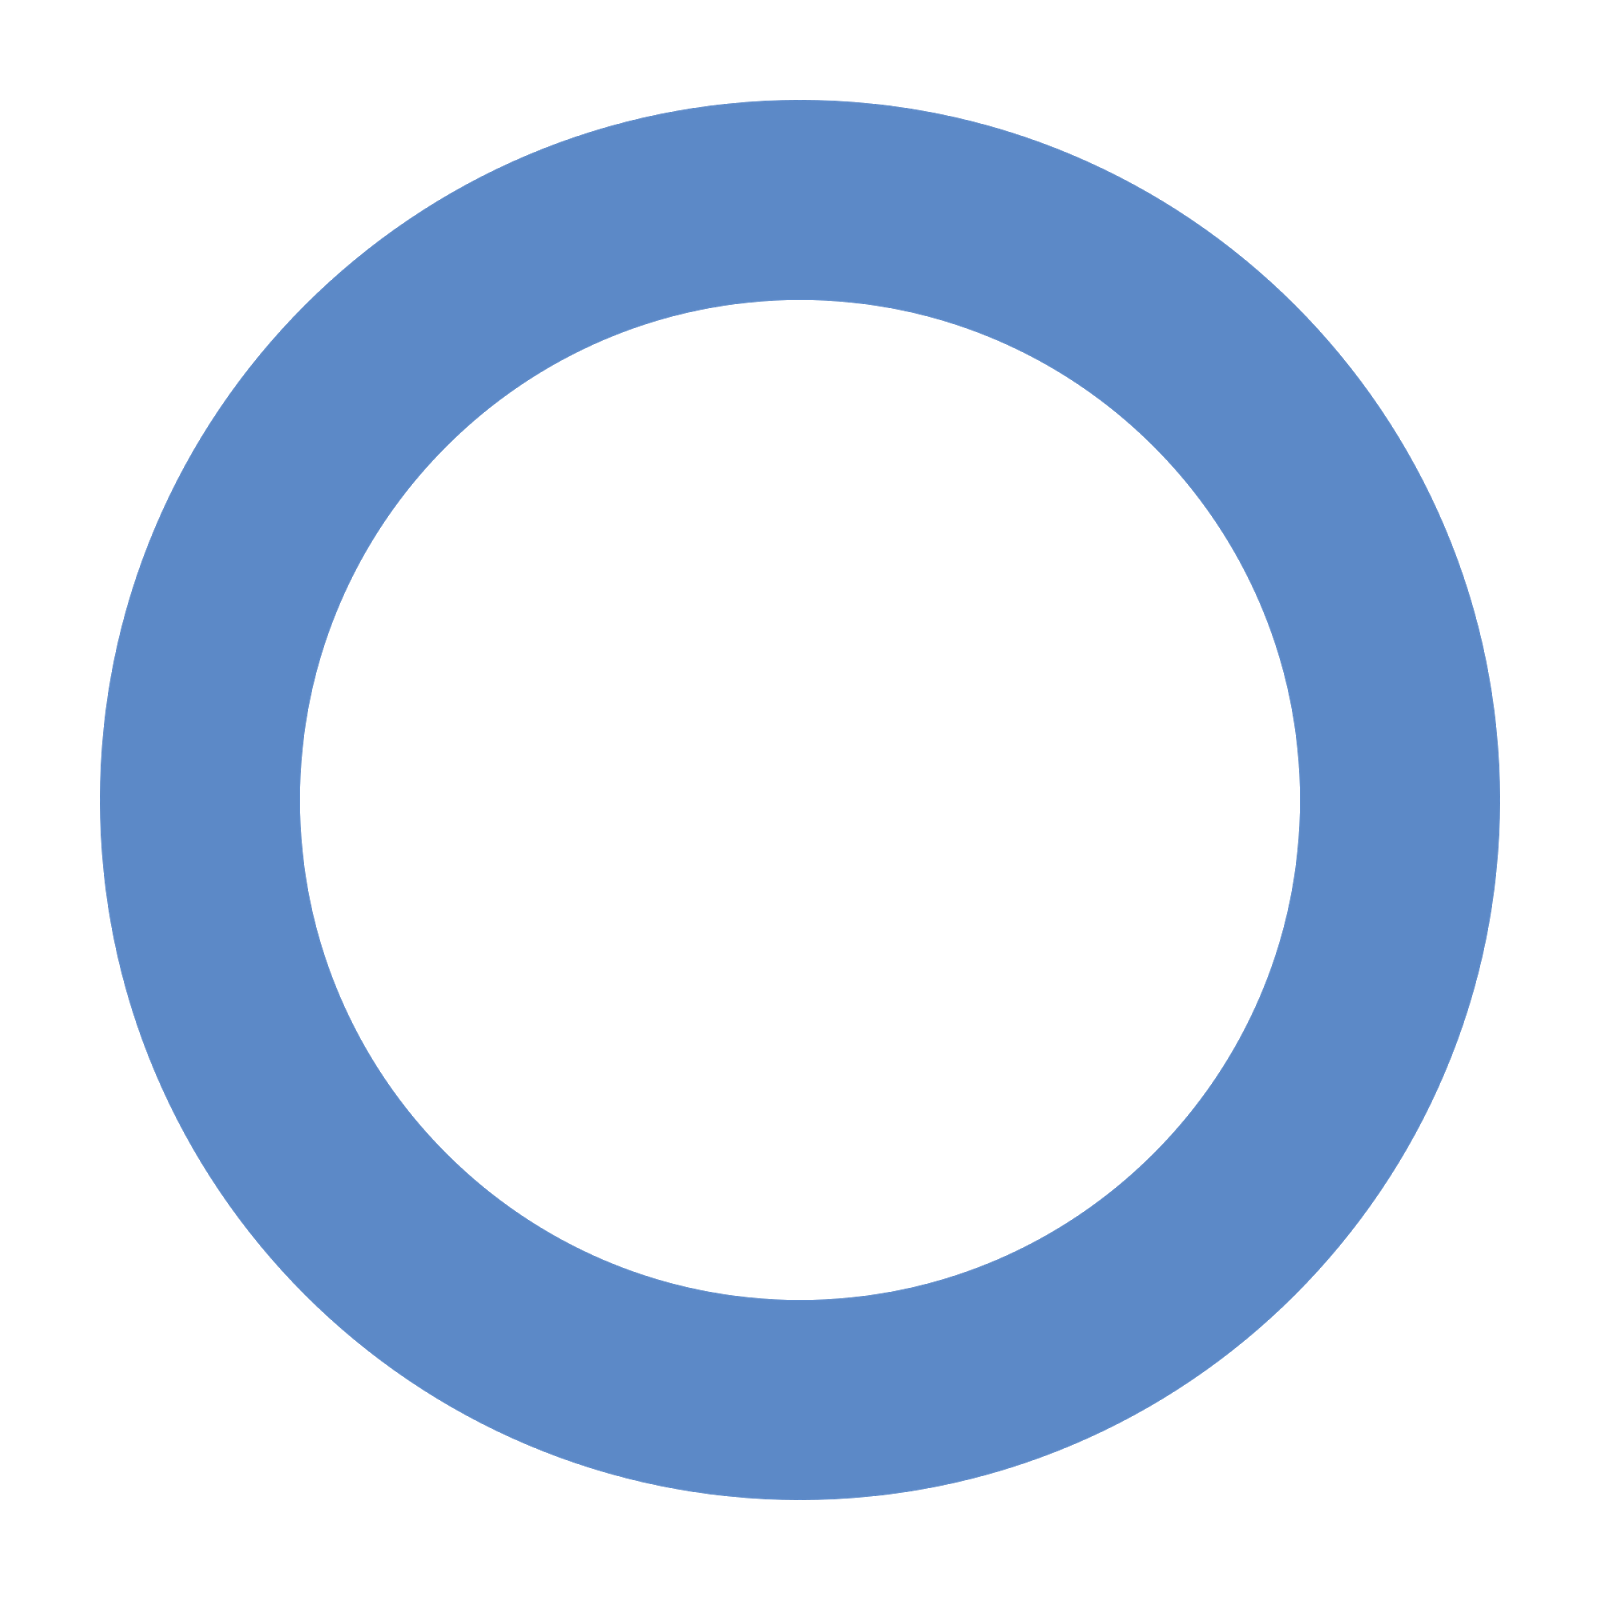 The Blue Circle